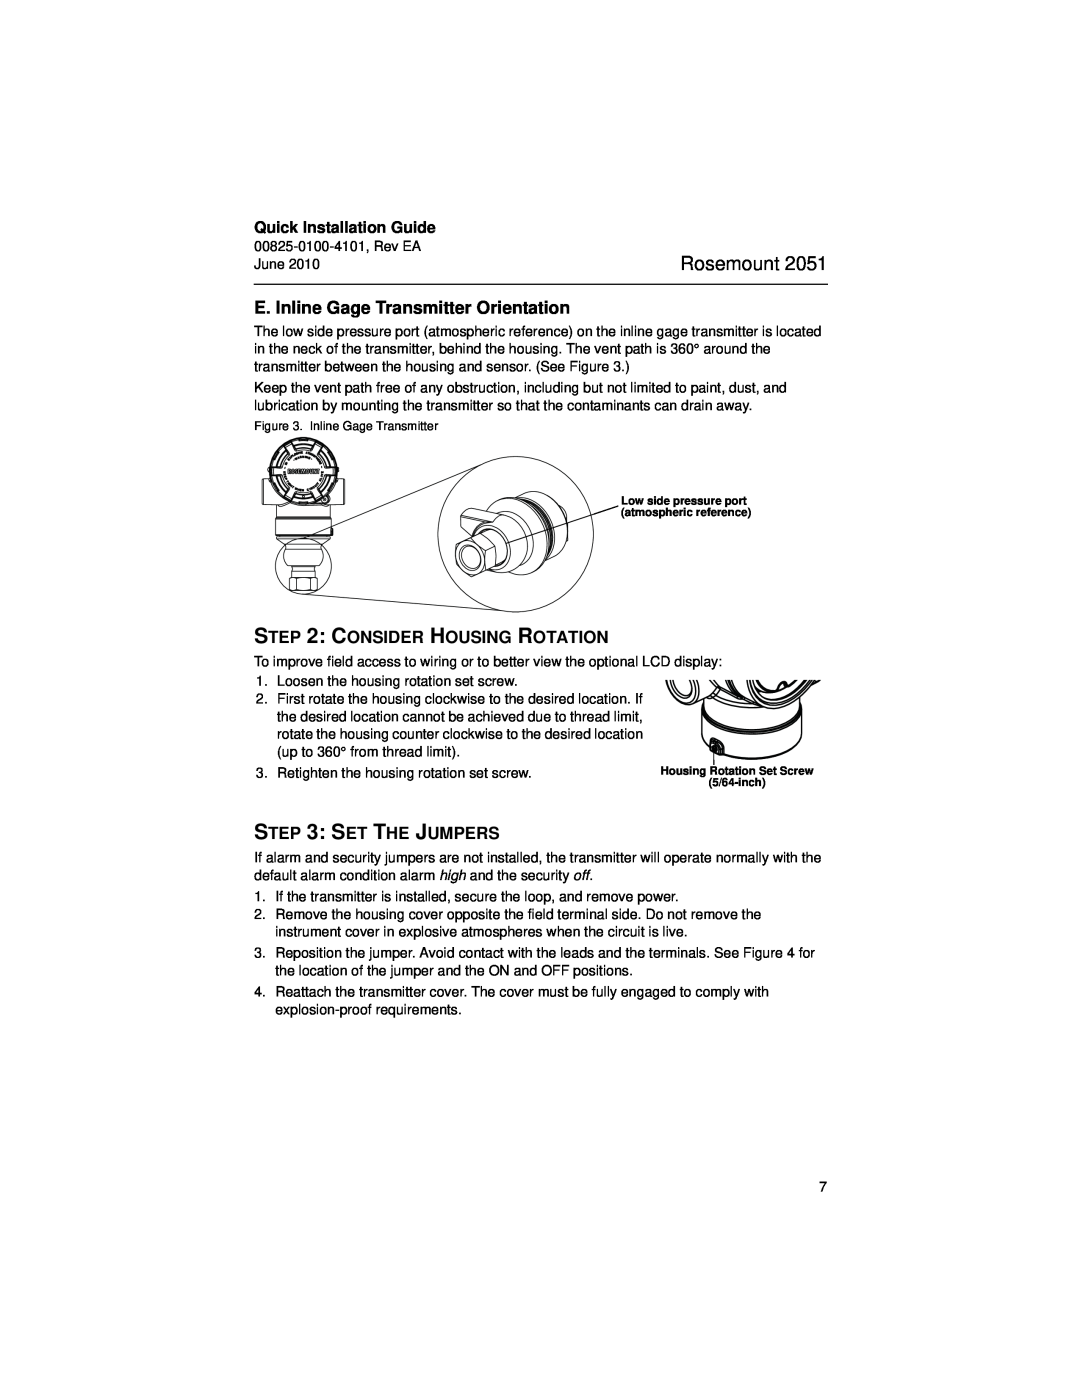 Emerson Process Management 2051CF manual Rosemount, E. Inline Gage Transmitter Orientation, Consider Housing Rotation 